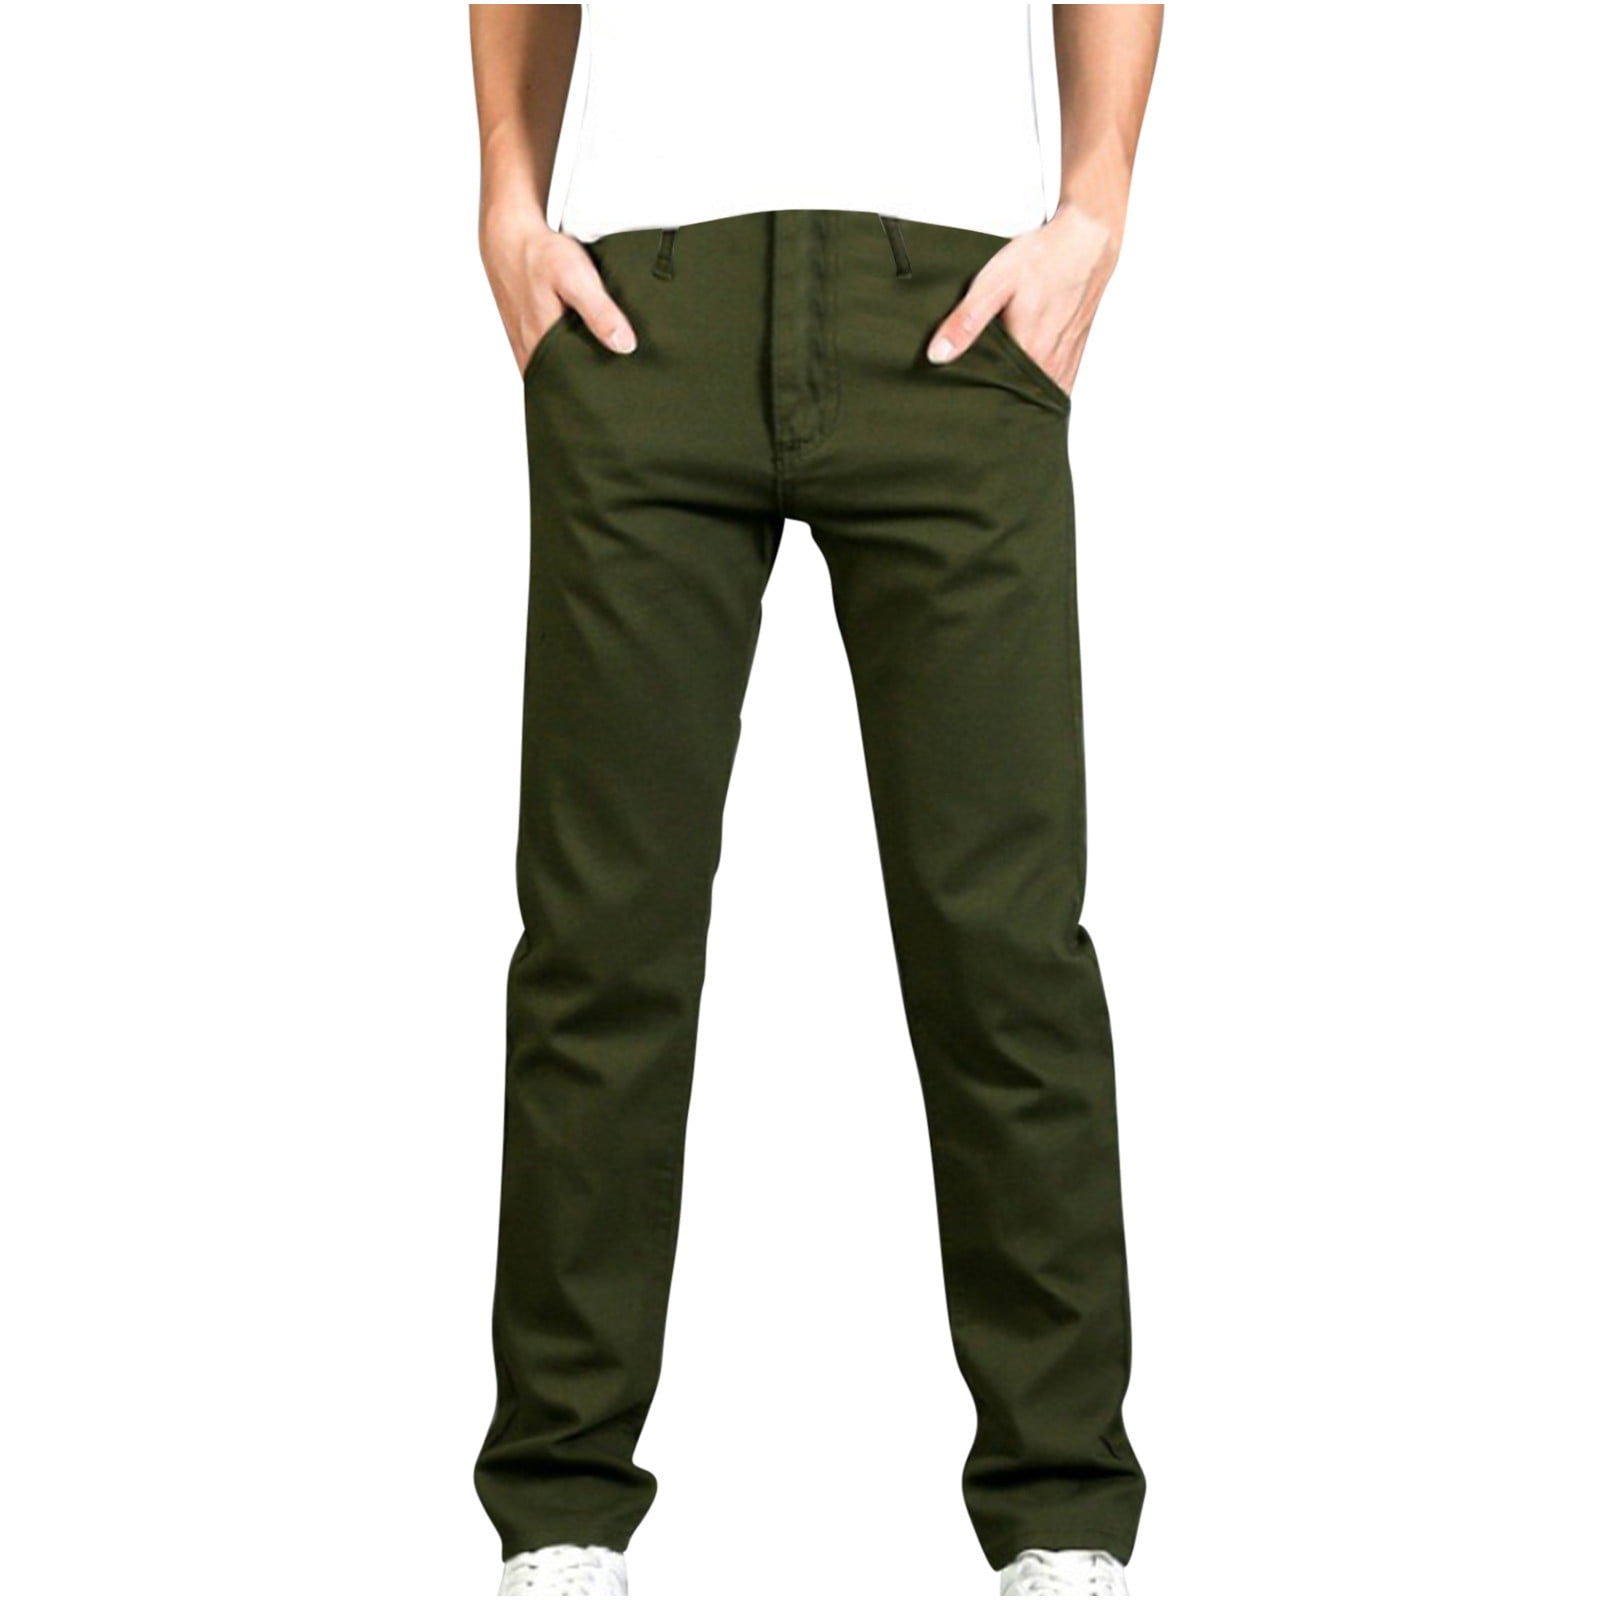 Gosuguu Cargo Pants for Men, Men Solid Casual Multiple Pockets Drawstring  Elastic Waist Fitness Pants Trousers Joggers Sweatpants #3 - Walmart.com